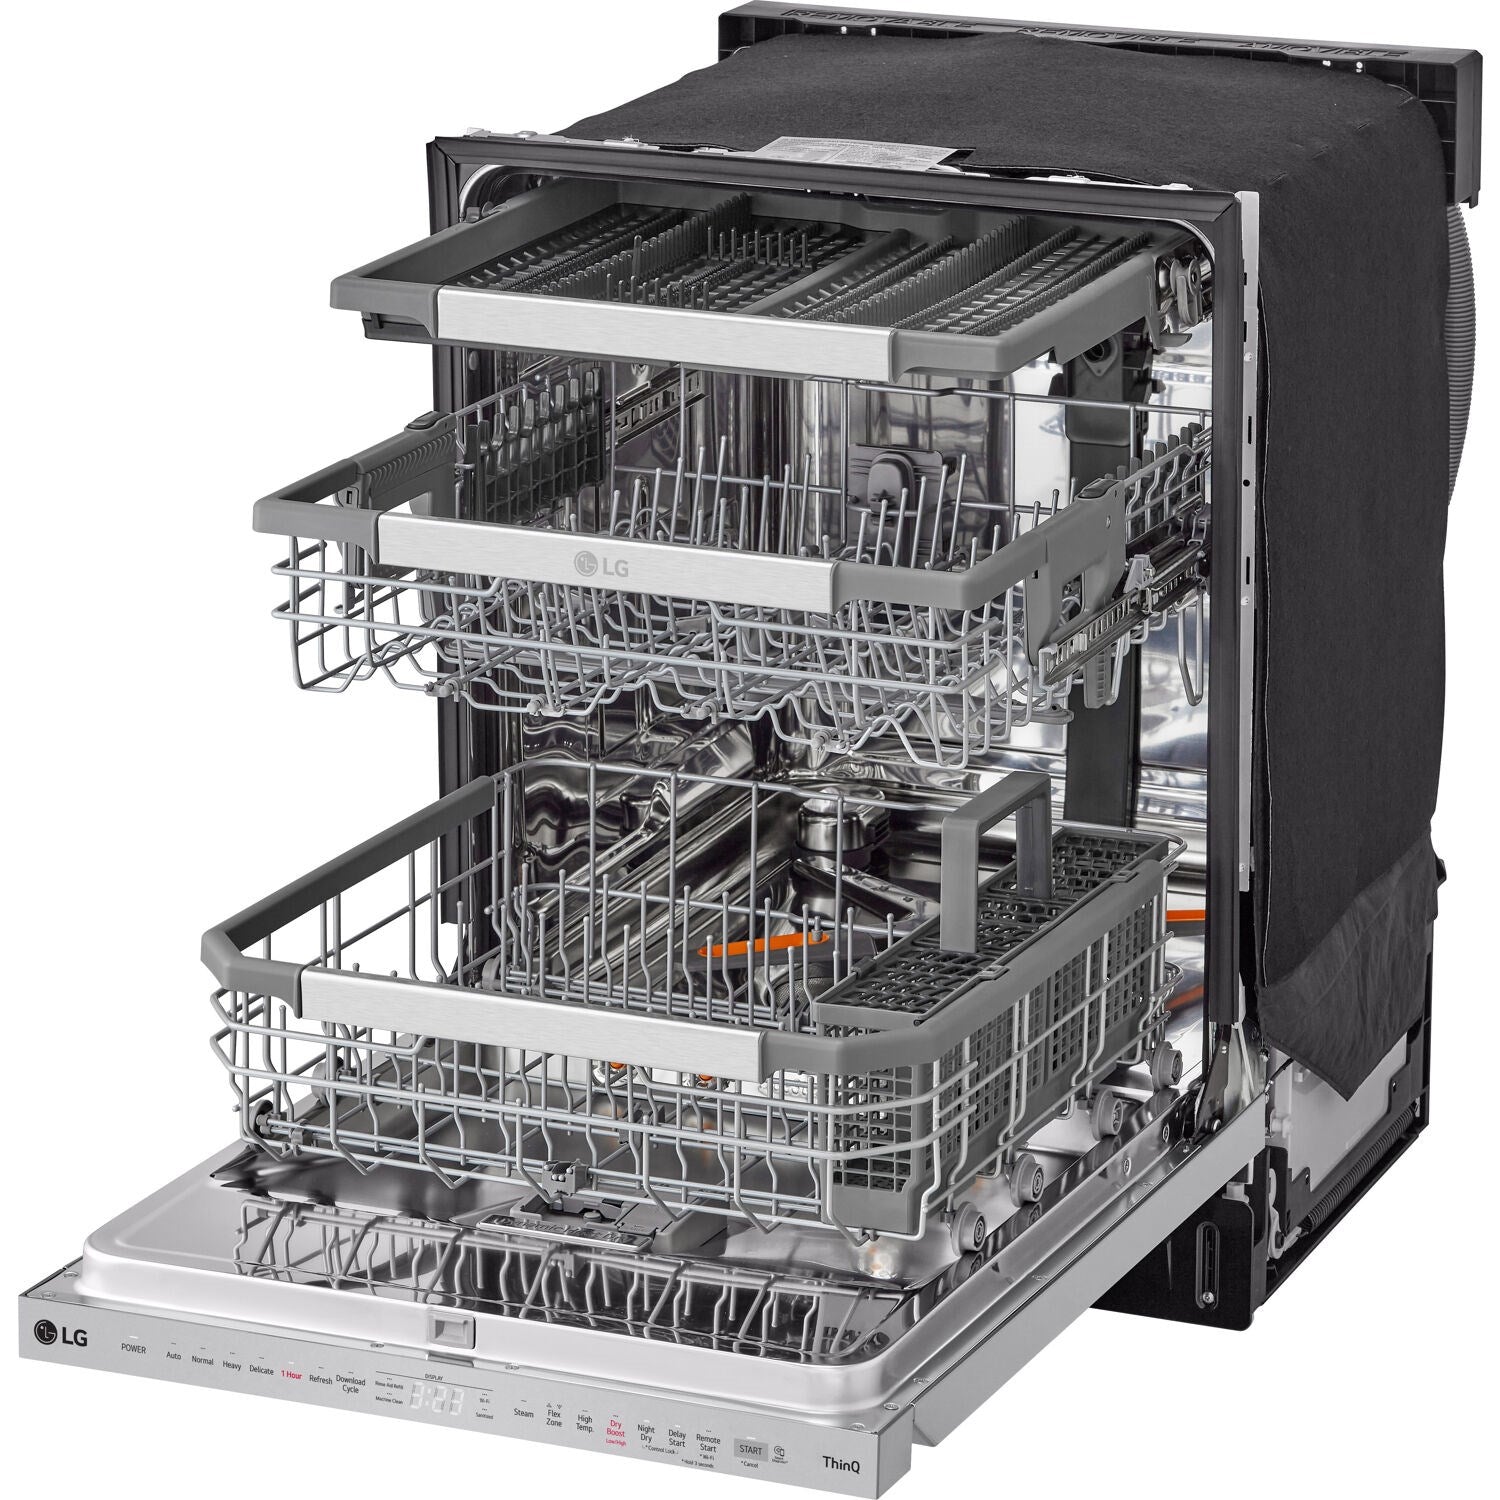 LG - 24" Top Control Dishwasher, 42dB, Smart WiFi, Quad Wash Pro, Dynamic Dry Dishwashers - LDPH7972S